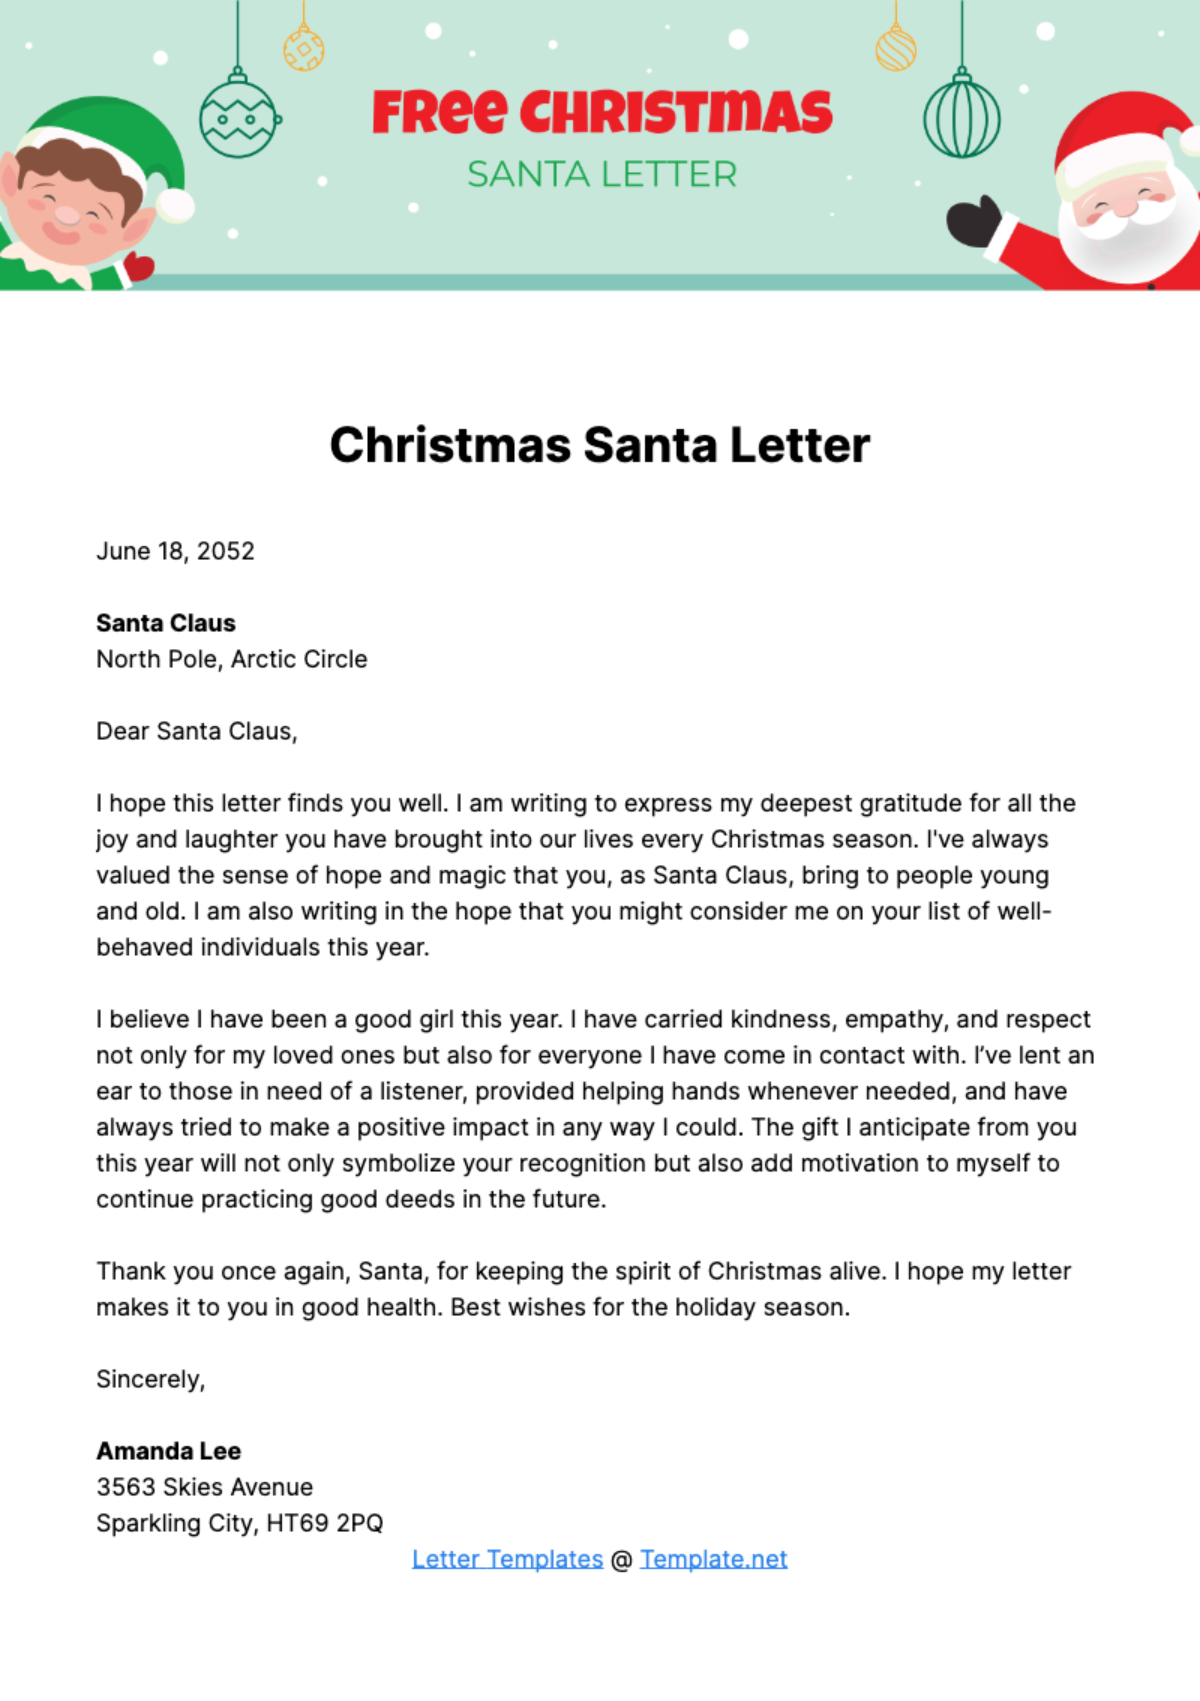 Free Christmas Santa Letter Template